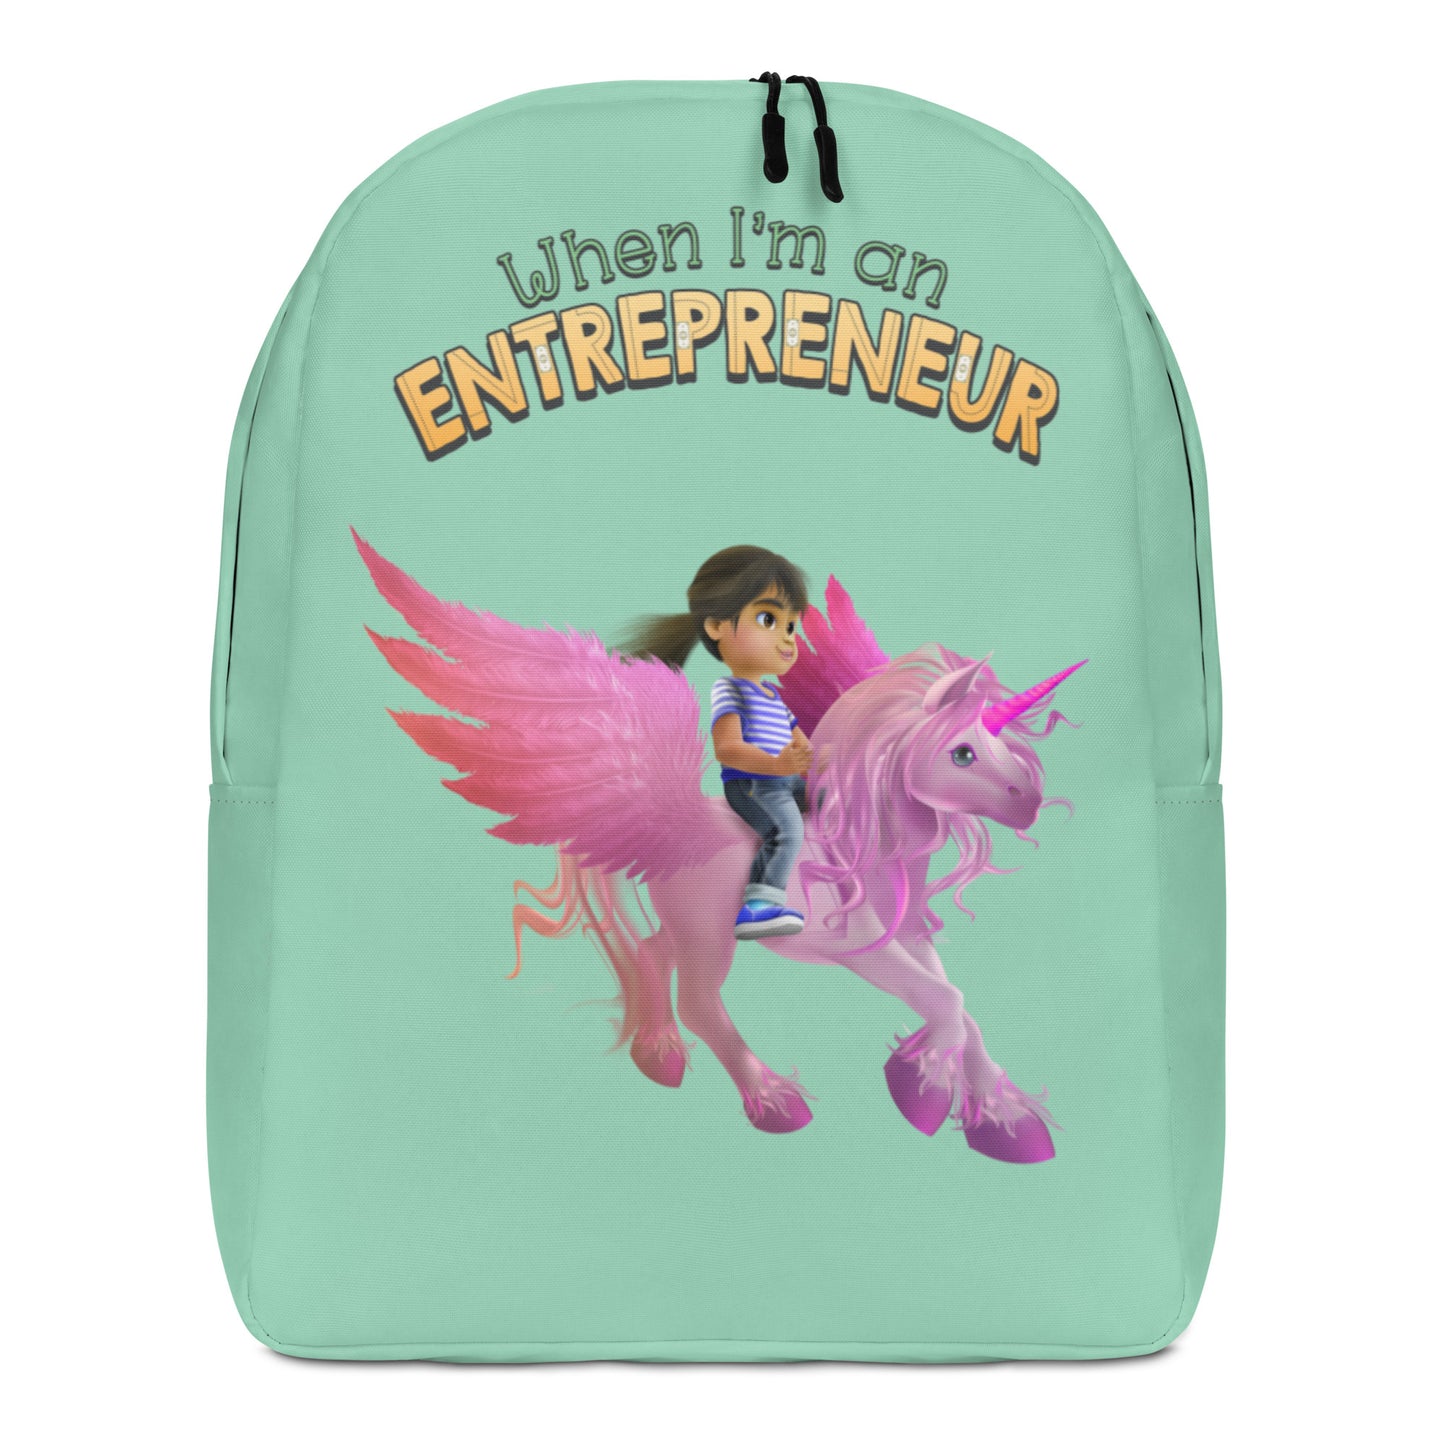 The coolest best fun unicorn entrepreneur CEO girl boss backpack